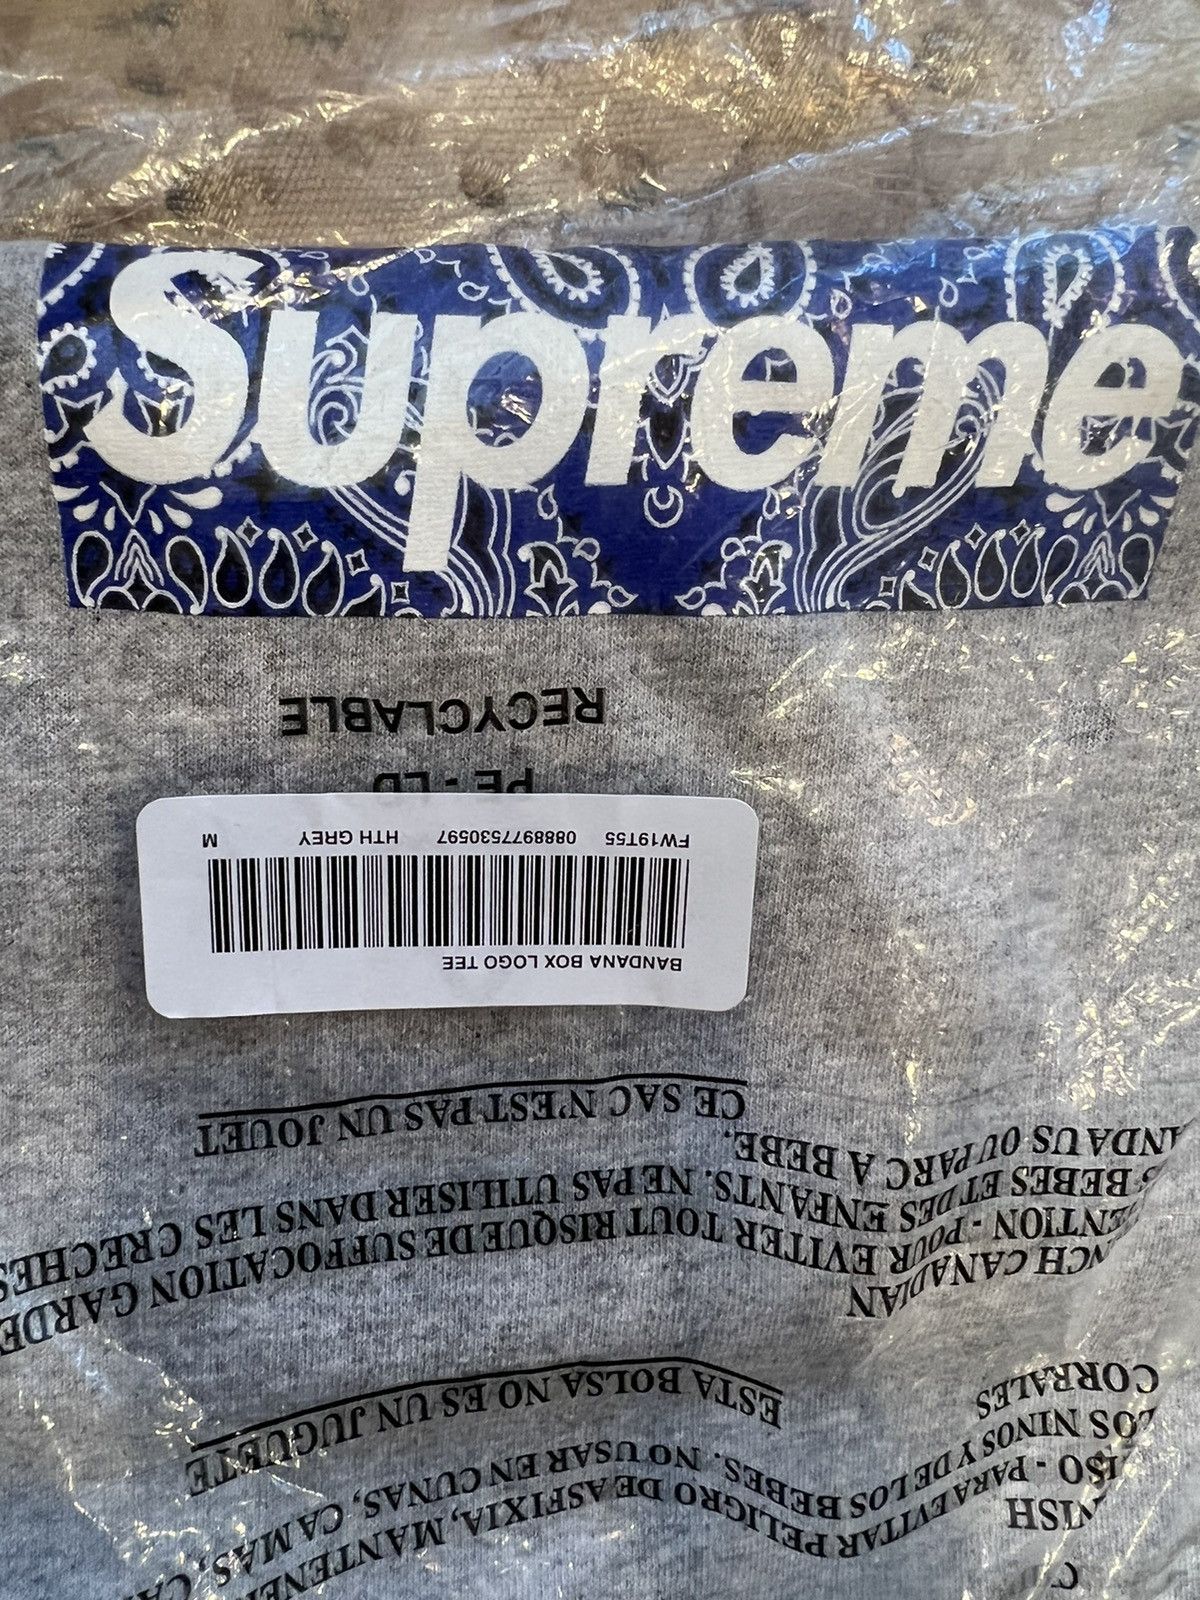 Supreme Supreme bandana box logo tee | Grailed